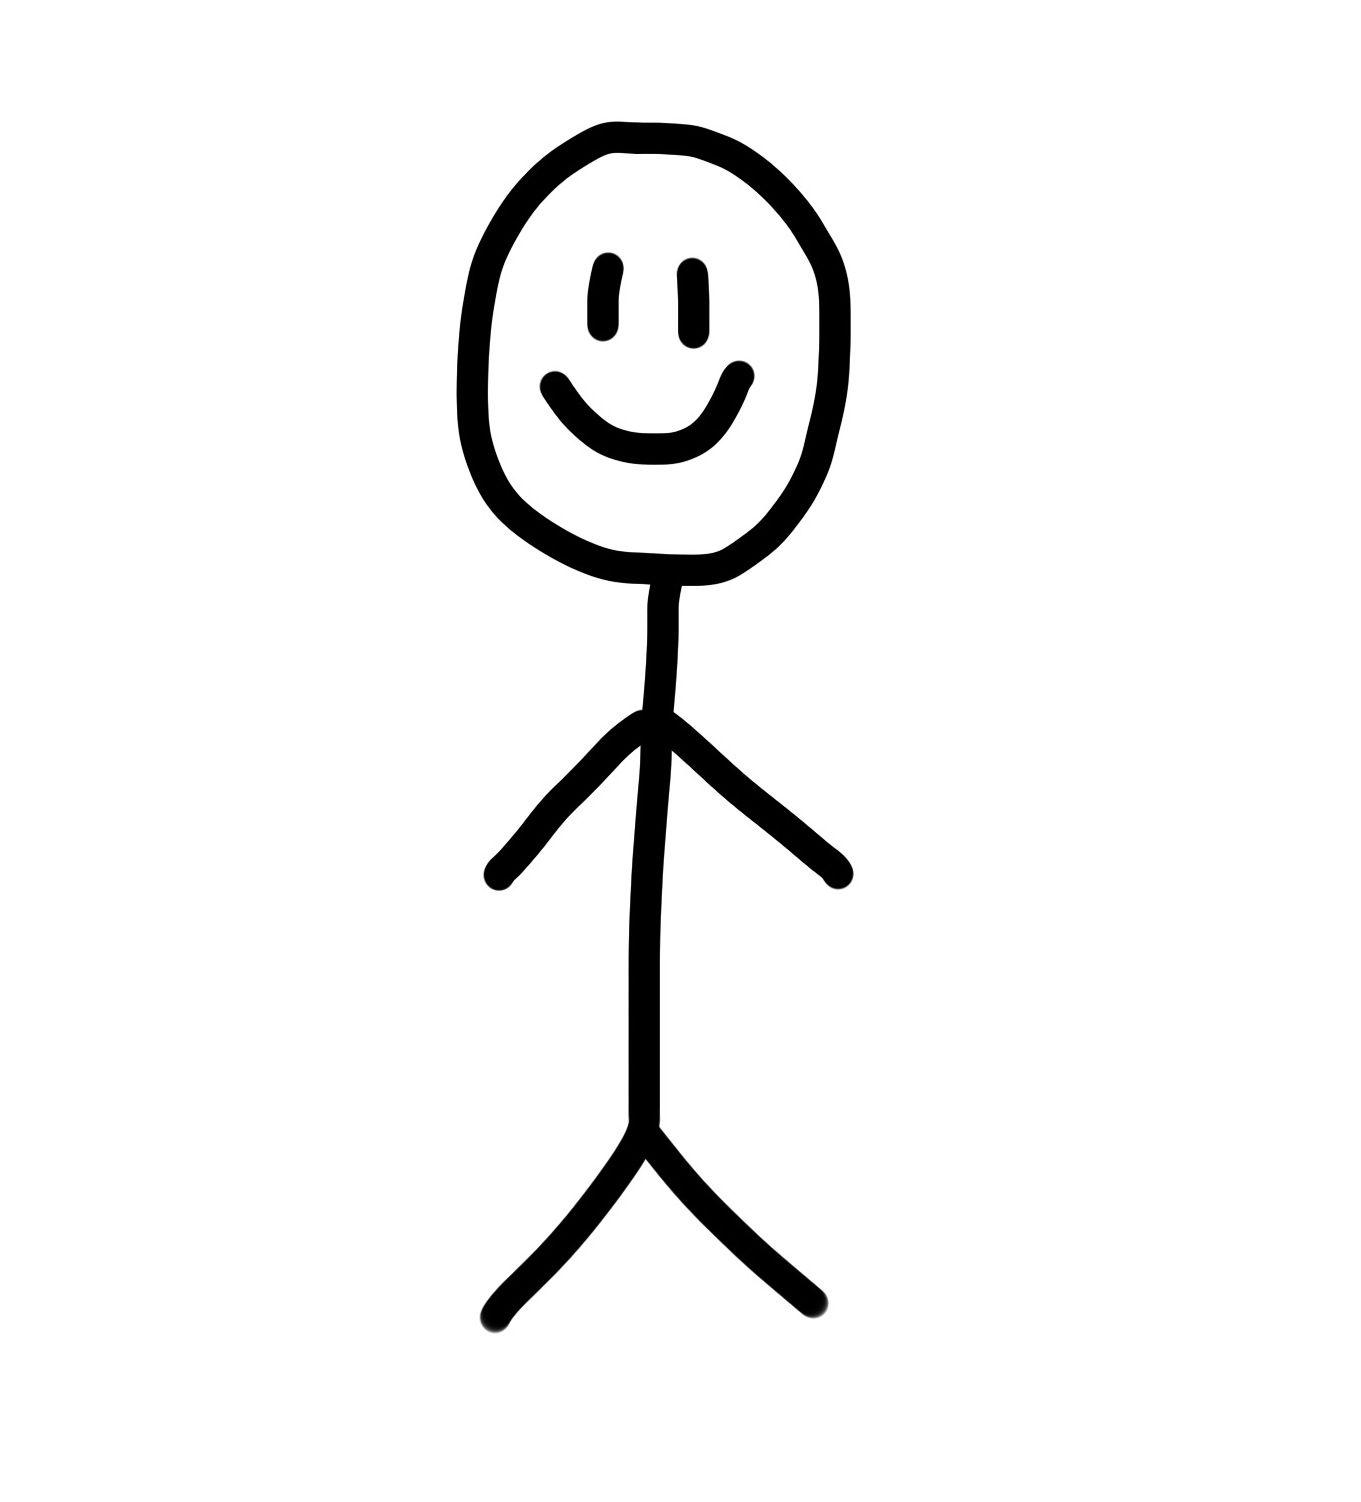 Stick Person Logo - Contest - $35 Simple Stick Figure logo/image